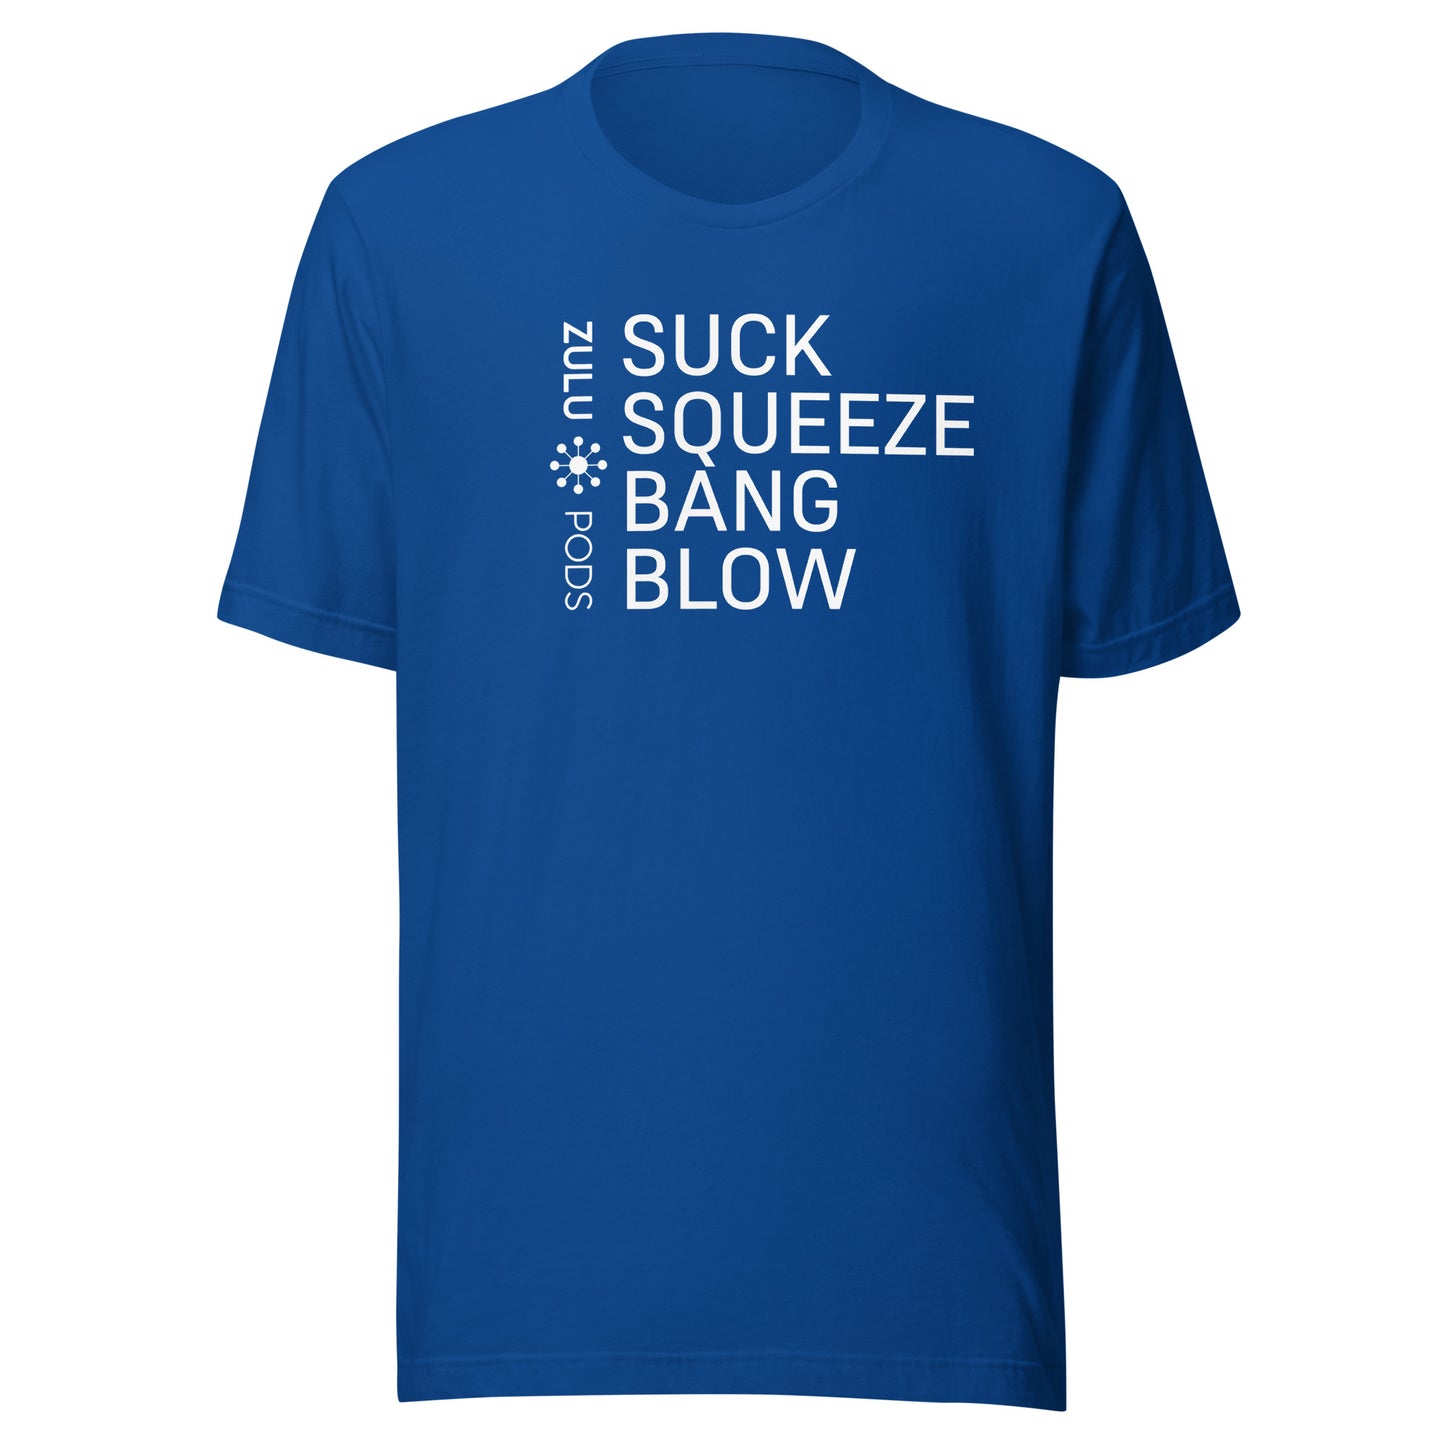 Suck Squeeze Bang Blow T-shirt